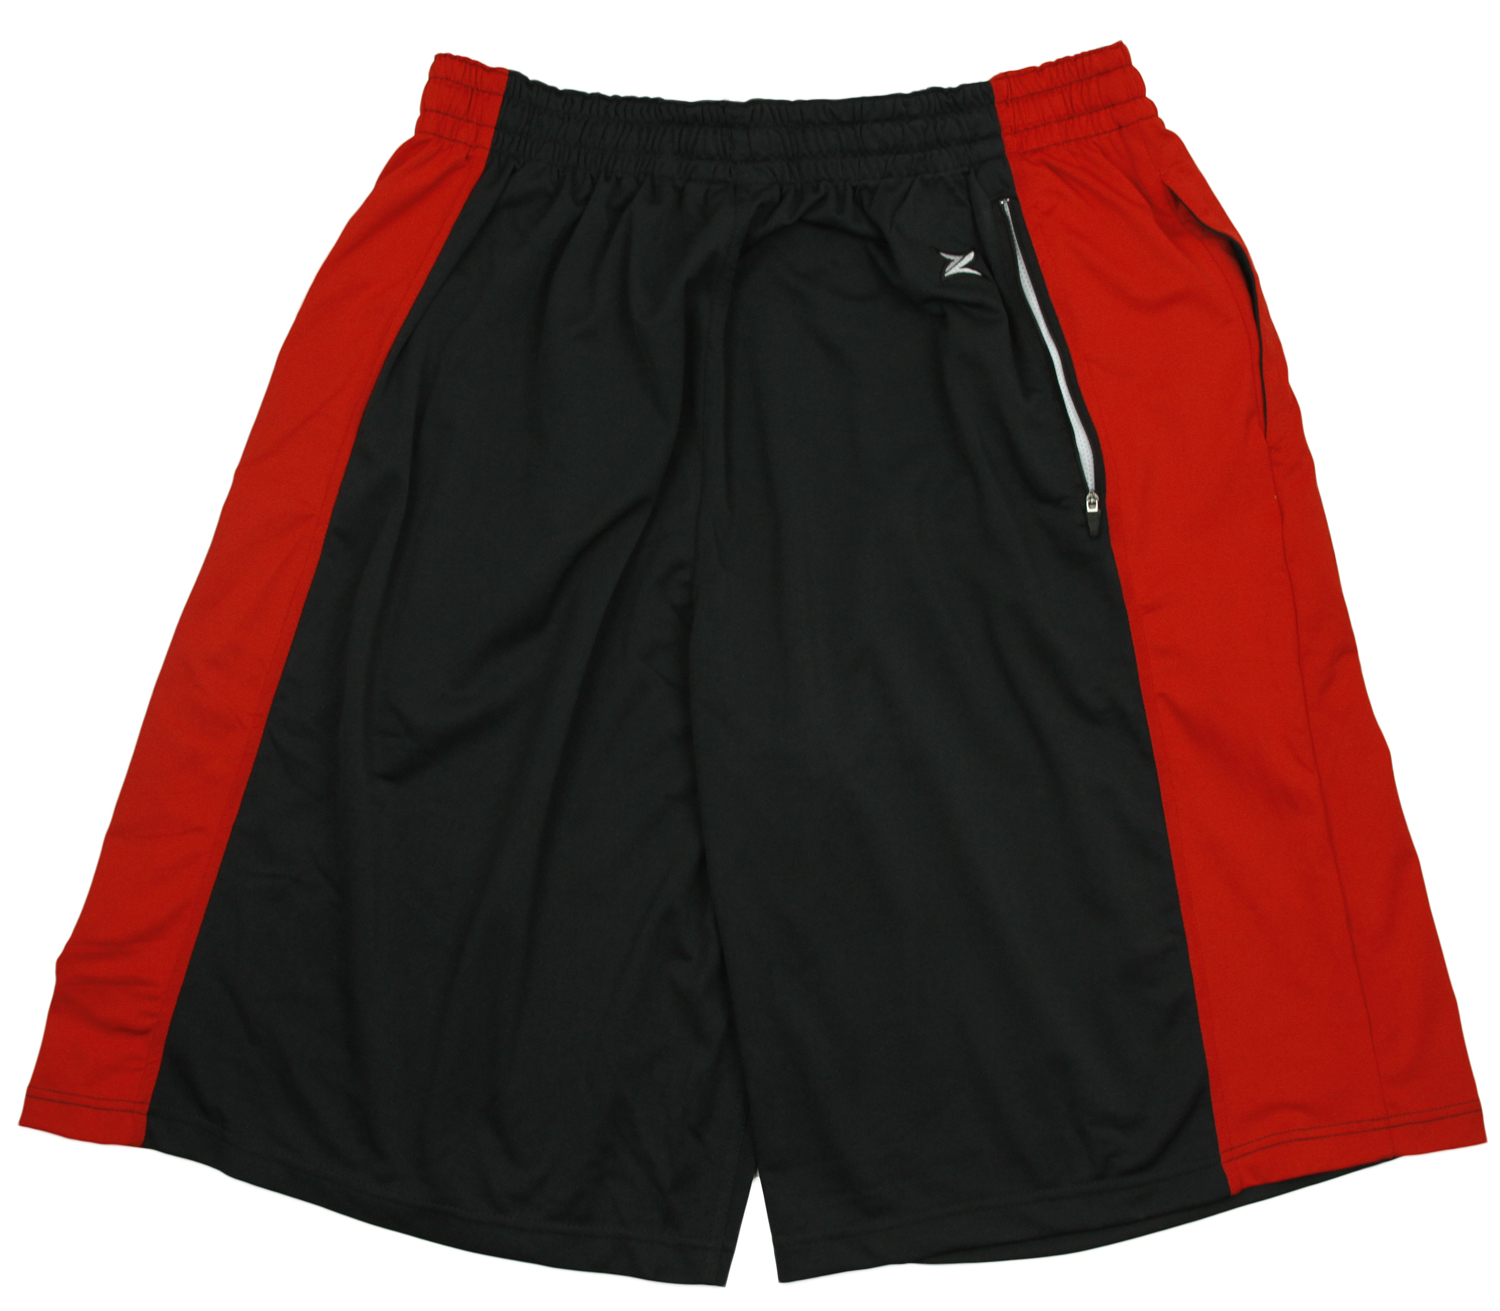 Zipway NBA Basketball Men's Atlanta Hawks Shorts - Black / Red | eBay